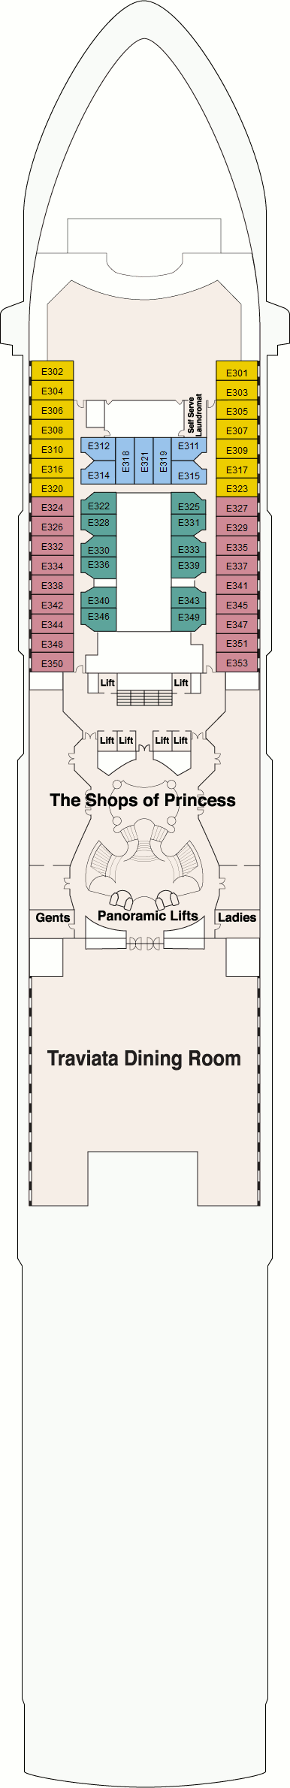 Sea Princess Emerald Deck Deck Plan